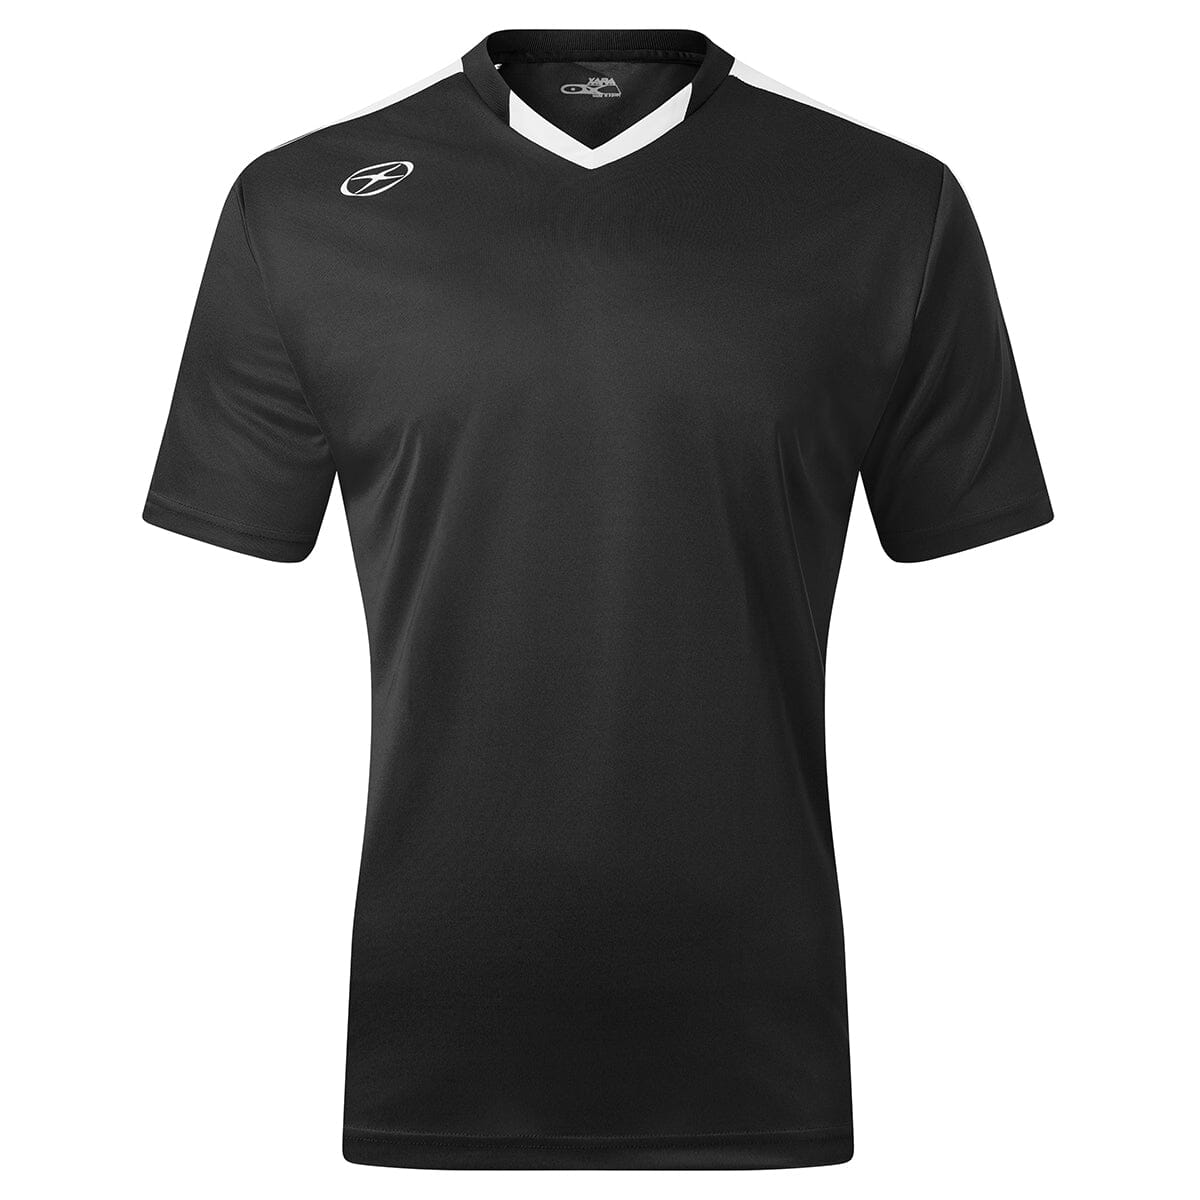 Britannia Jersey - Home Colors - Male Shirt Xara Soccer Black/White Large 